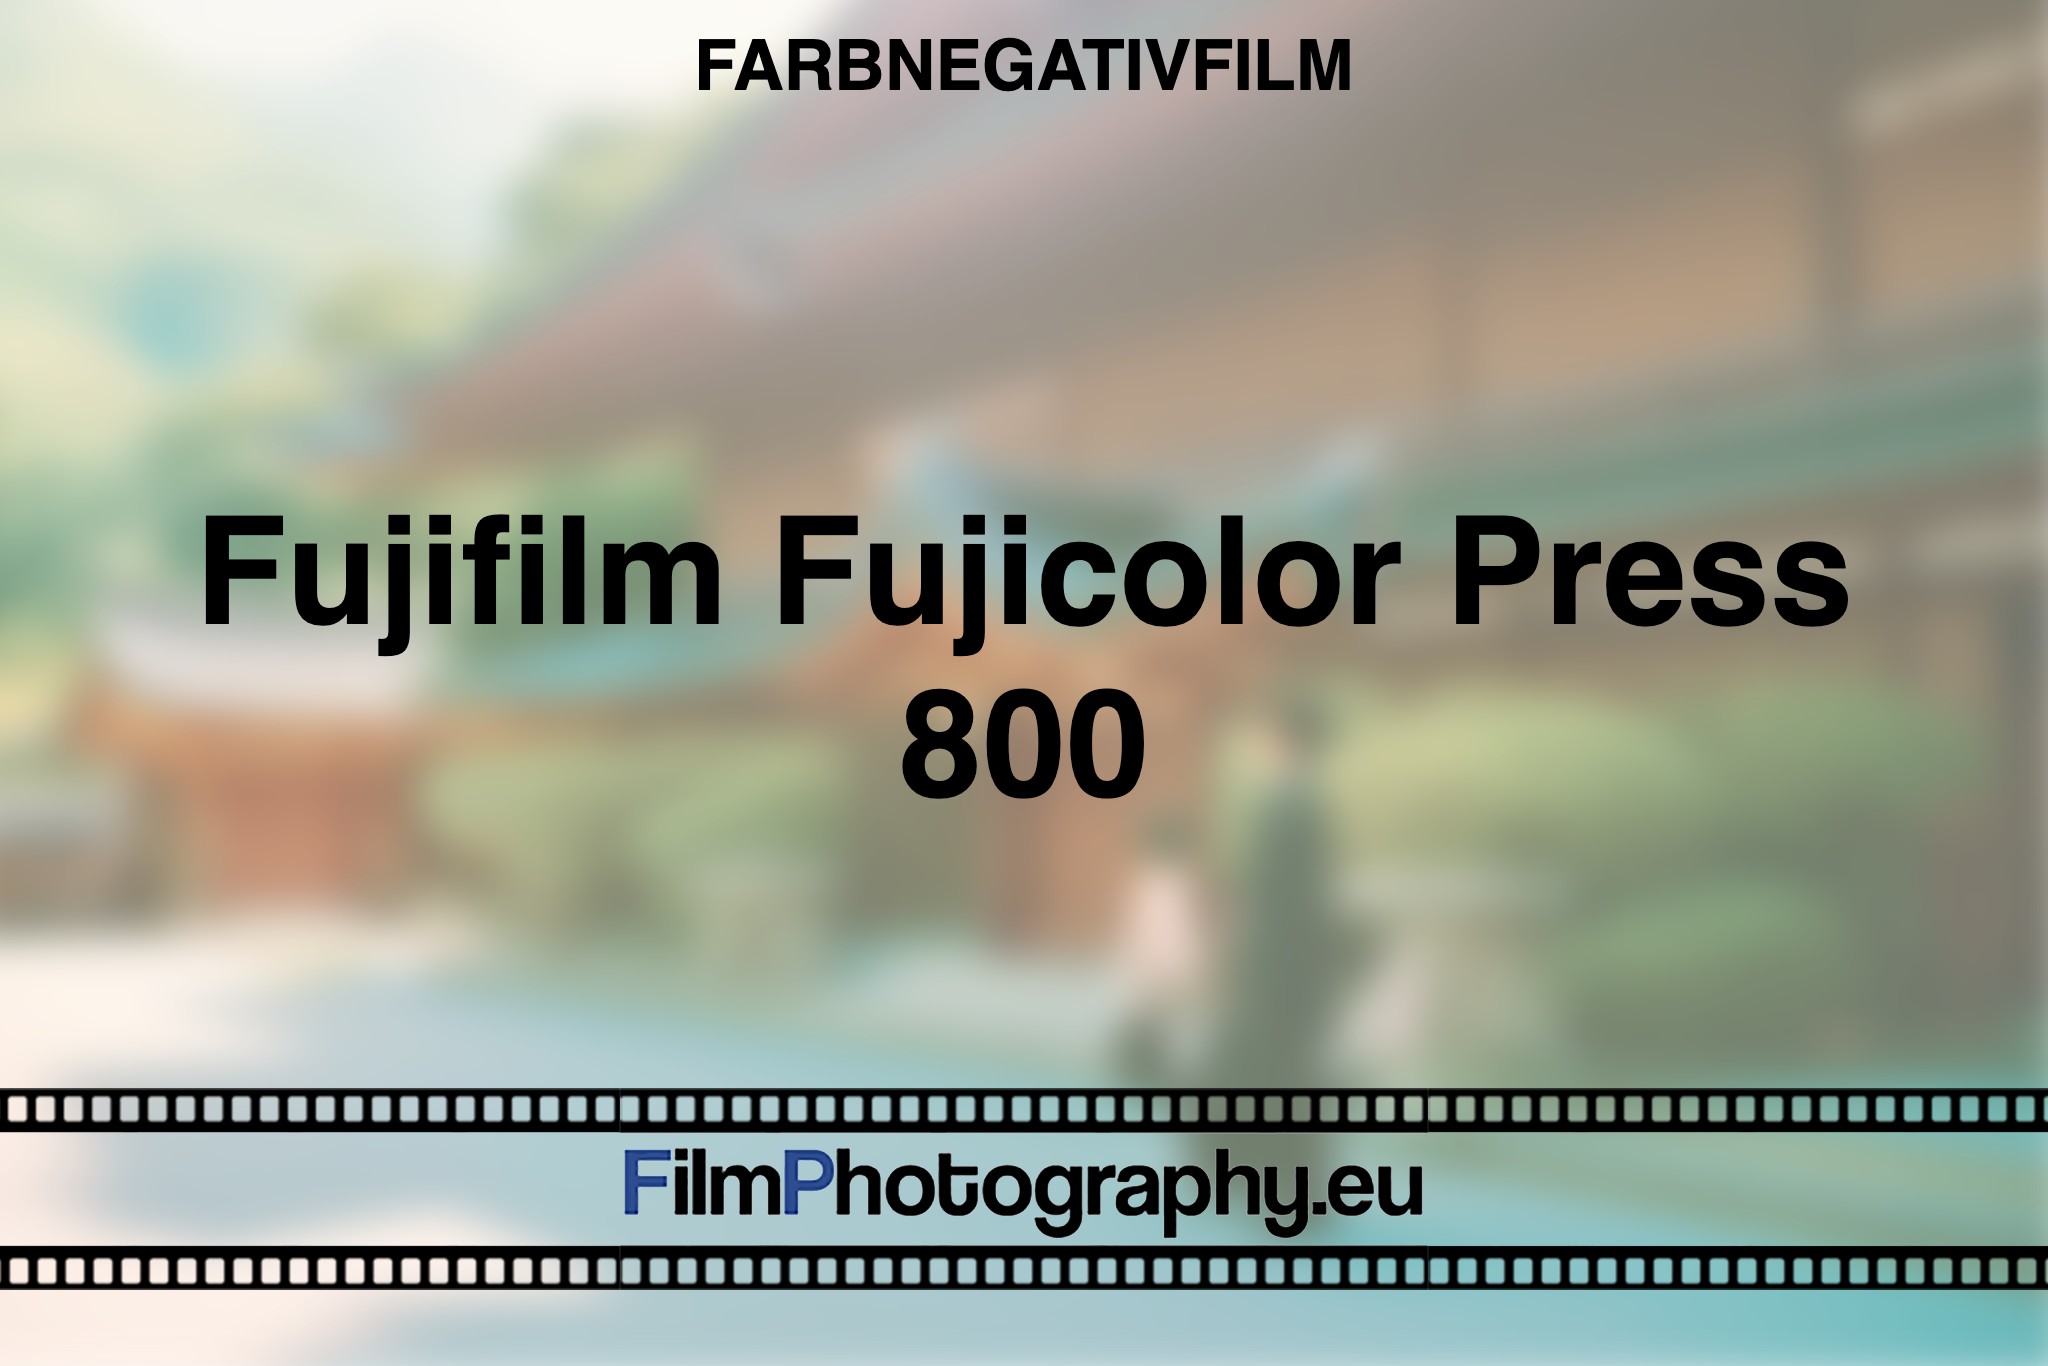 fujifilm-fujicolor-press-800-farbnegativfilm-bnv